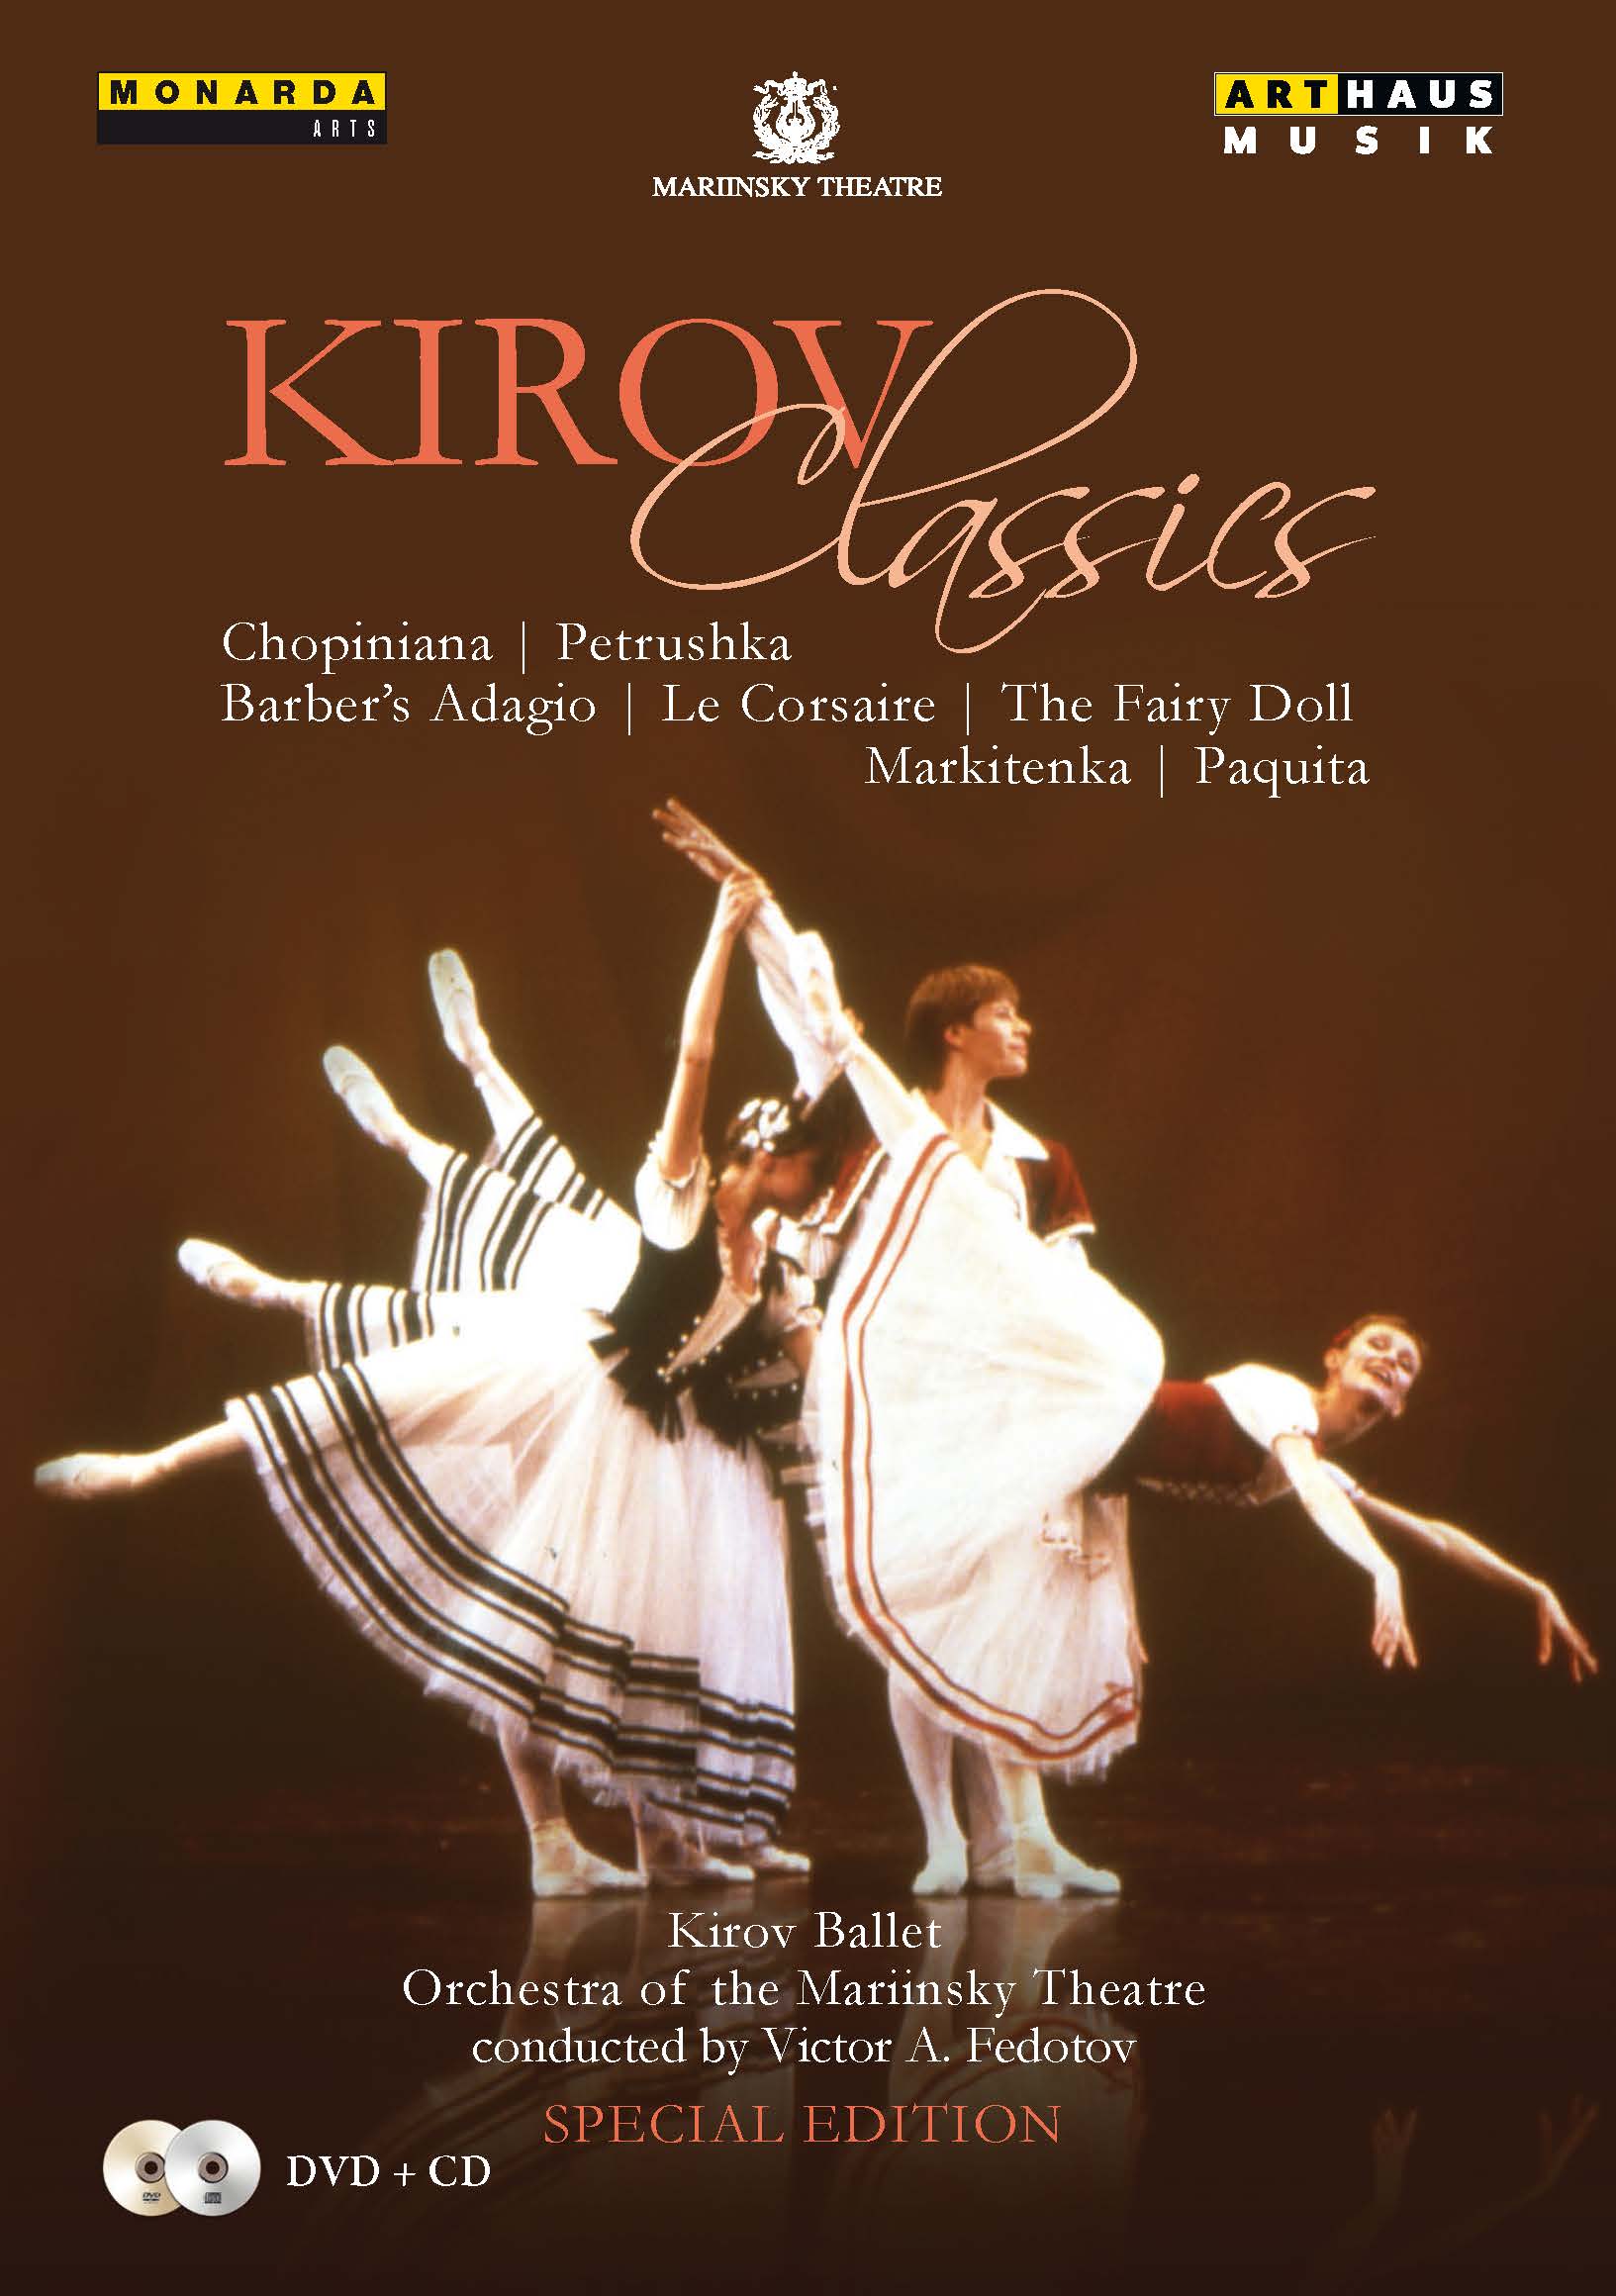 The Kirov Celebrates Nijinsky - Ballet DVD - Arthaus Musik